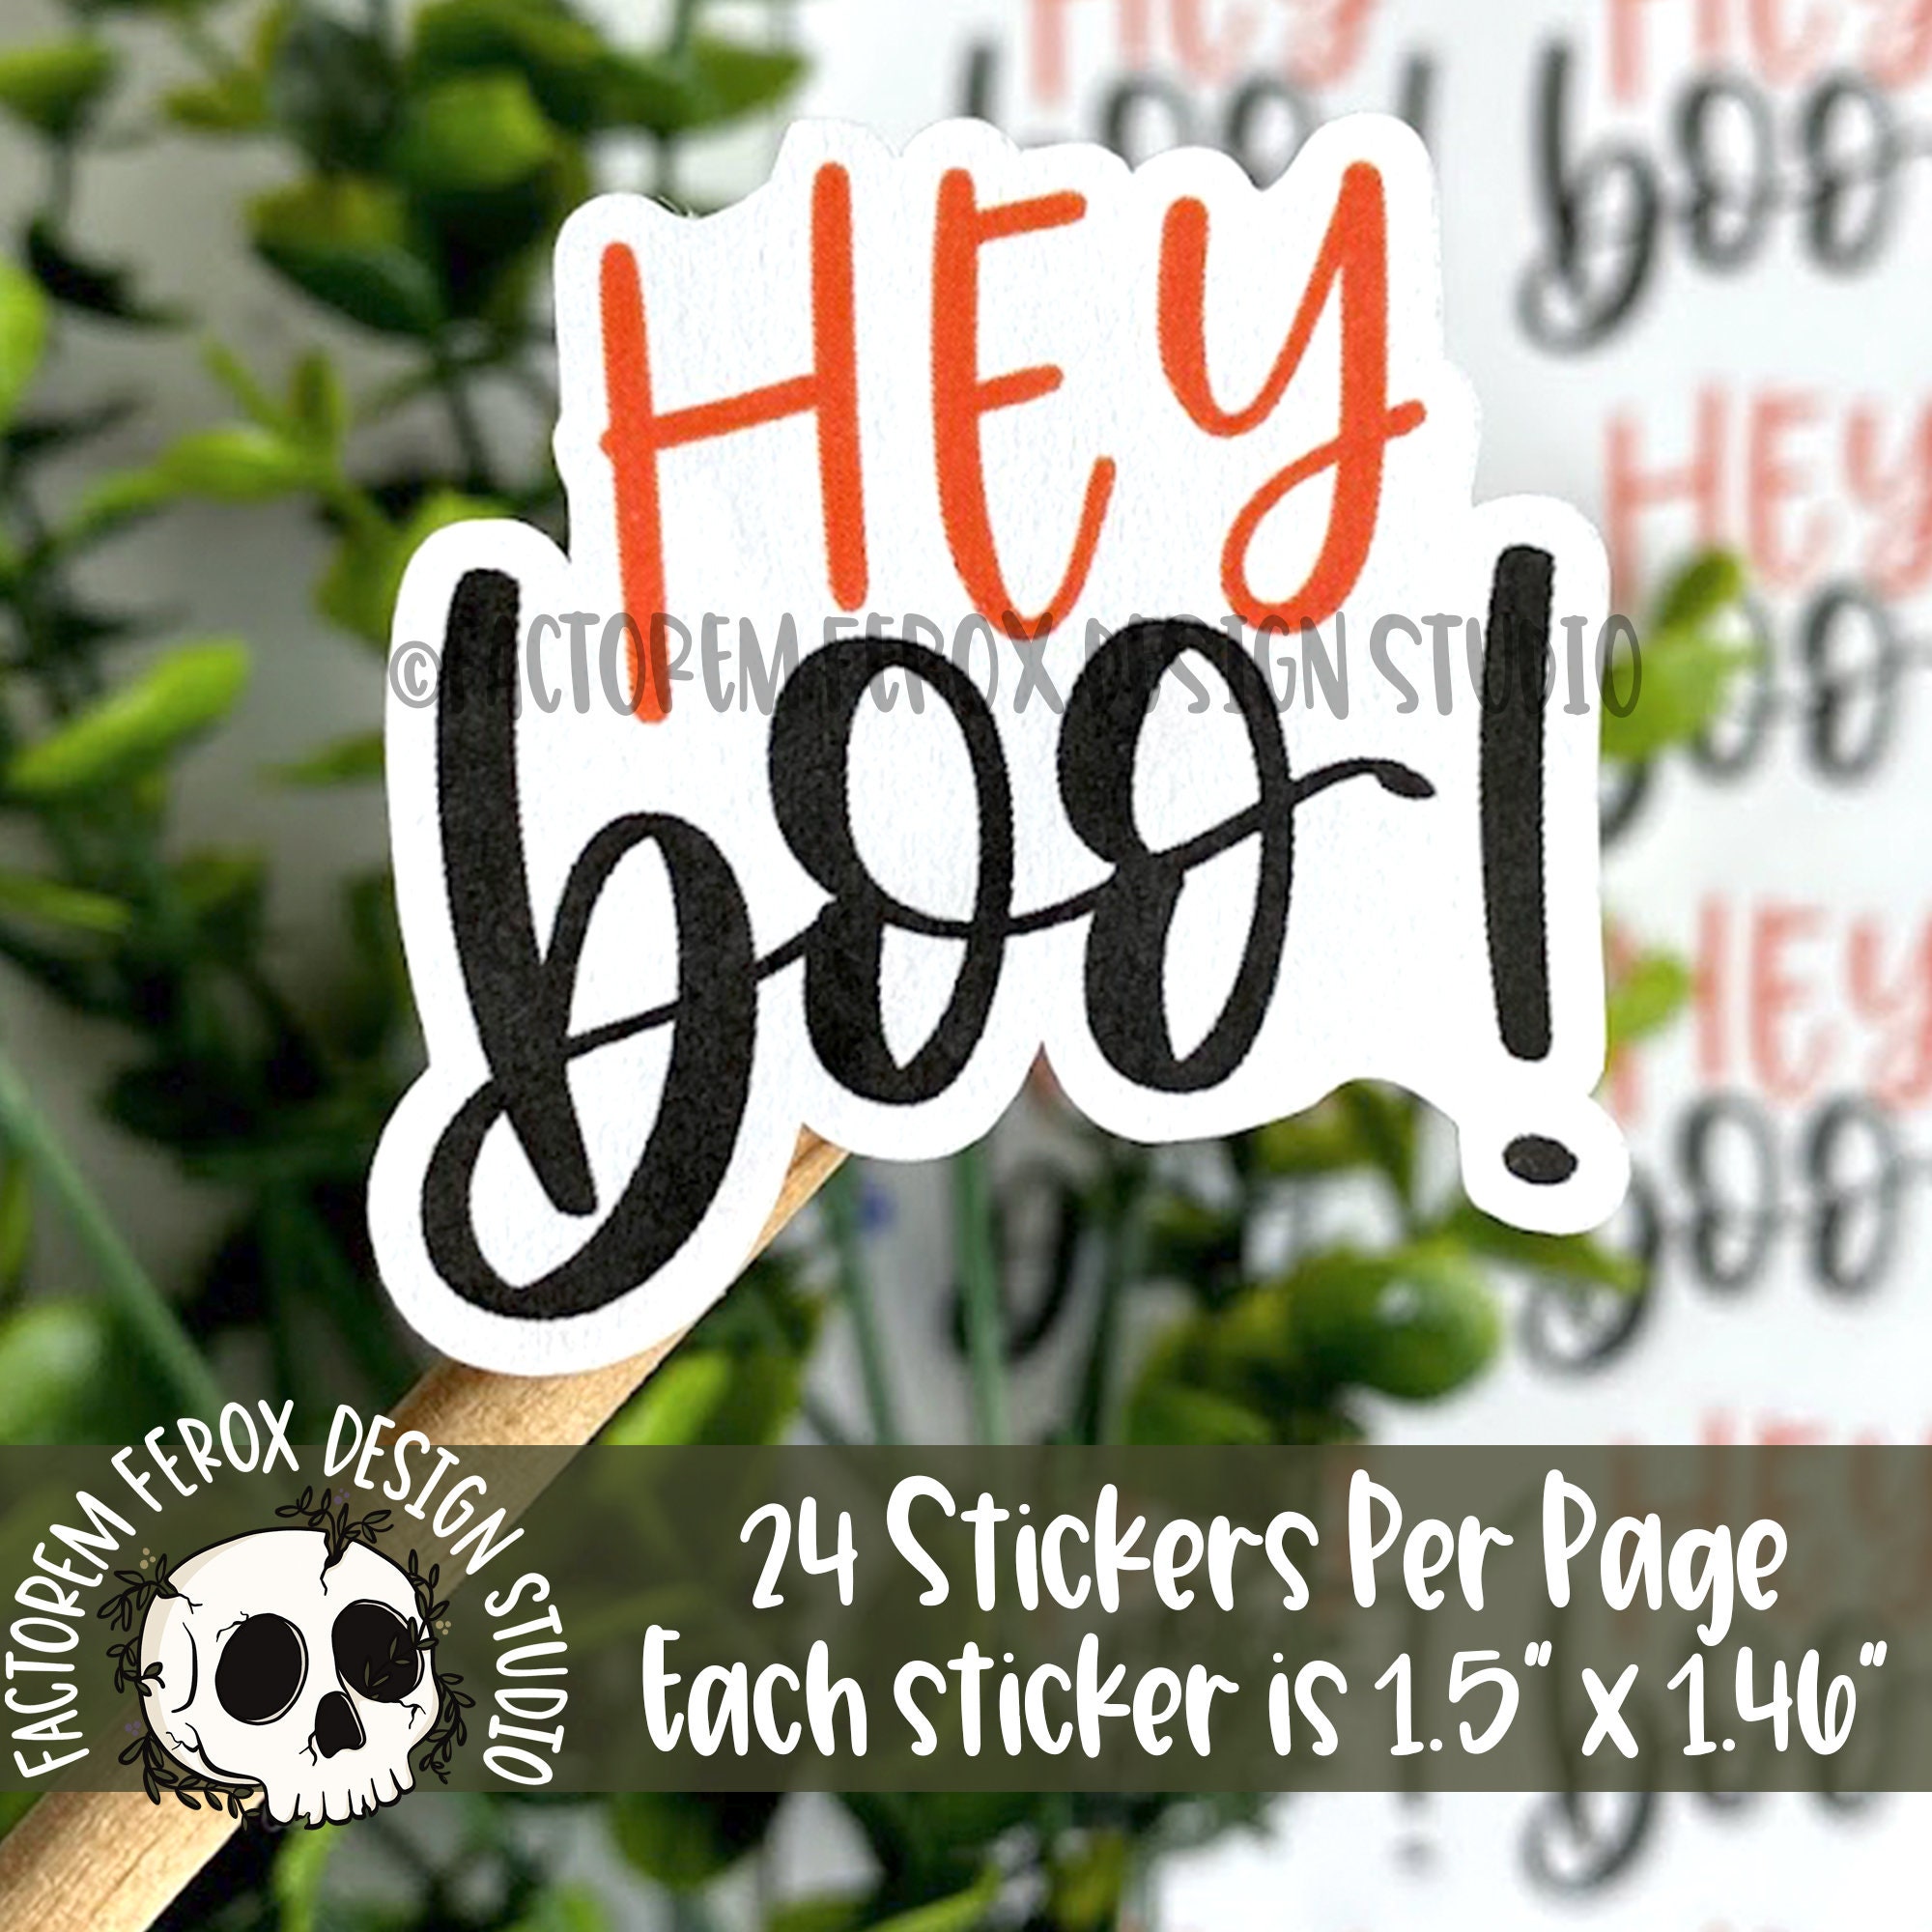 Discover Hey Boo Sticker, Halloween Sticker, Boo Sticker, printerval.com Sticker, Small Shop Sticker, Small Business Sticker, Packaging Supplies, Happy Mail